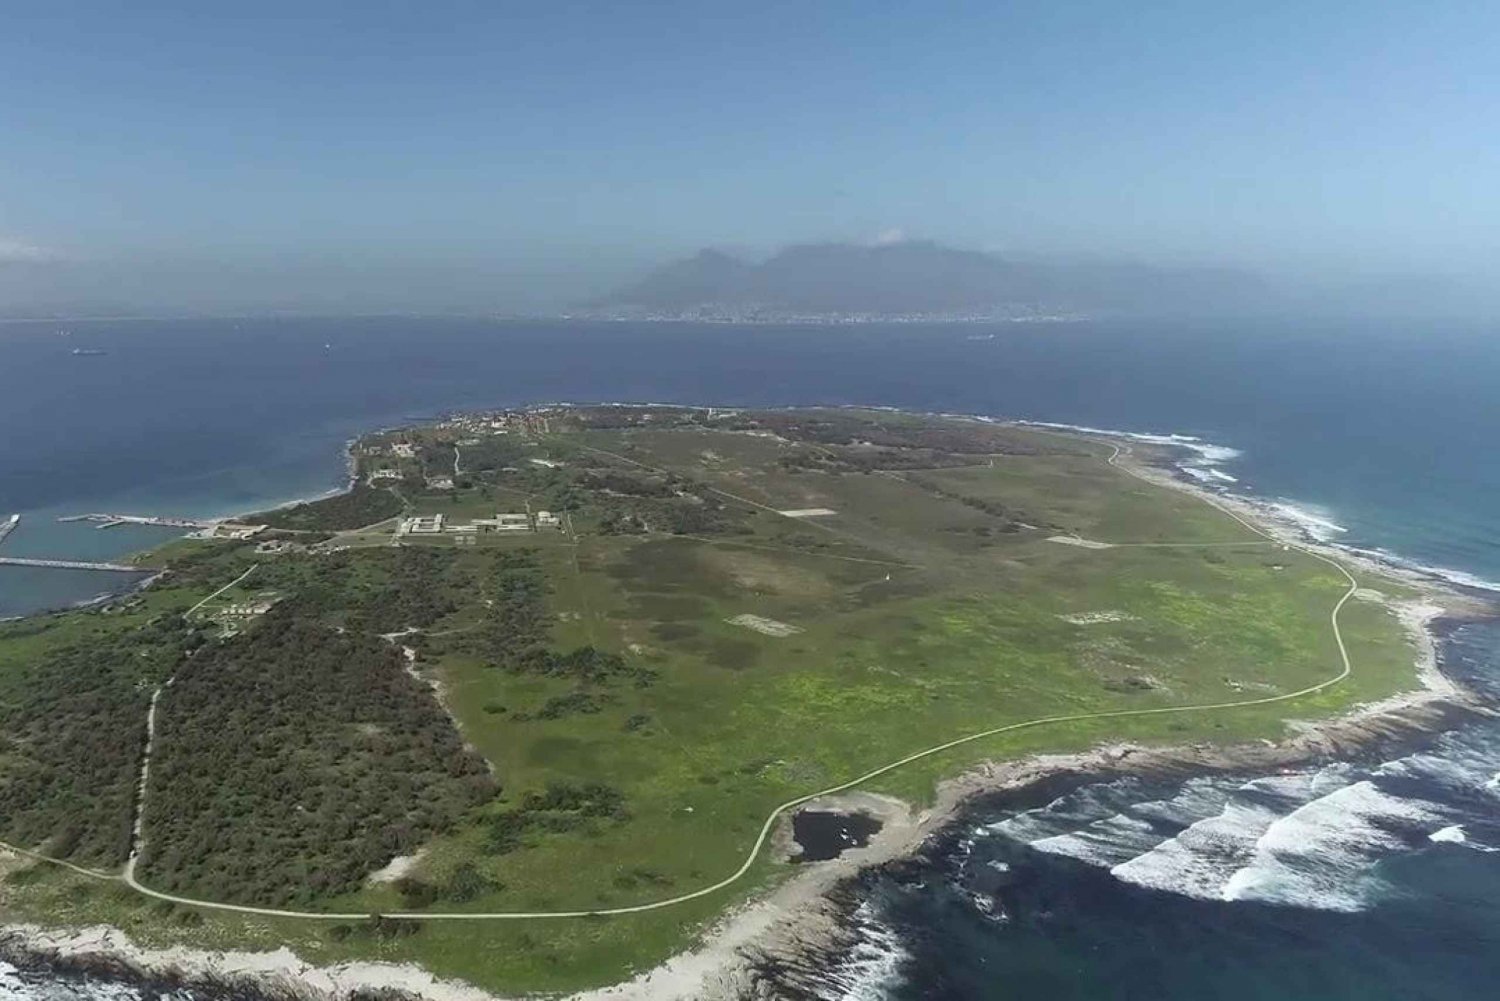 Halvdagstur til Robben Island med privat transport tur-retur